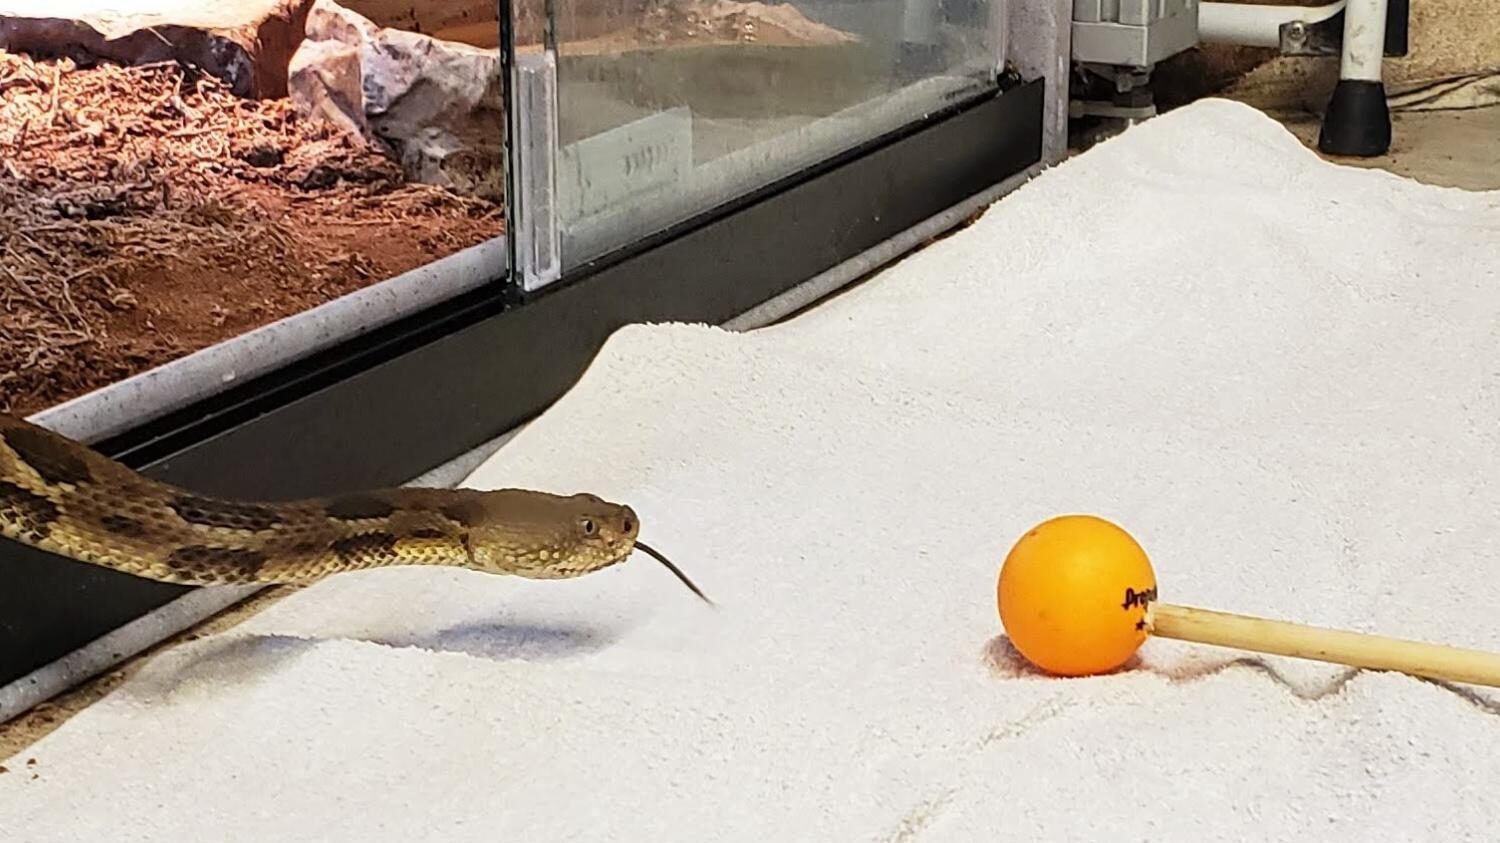 A rattlesnake voluntarily exits its enclosure during target training at Shaver's Creek Environmental Center.